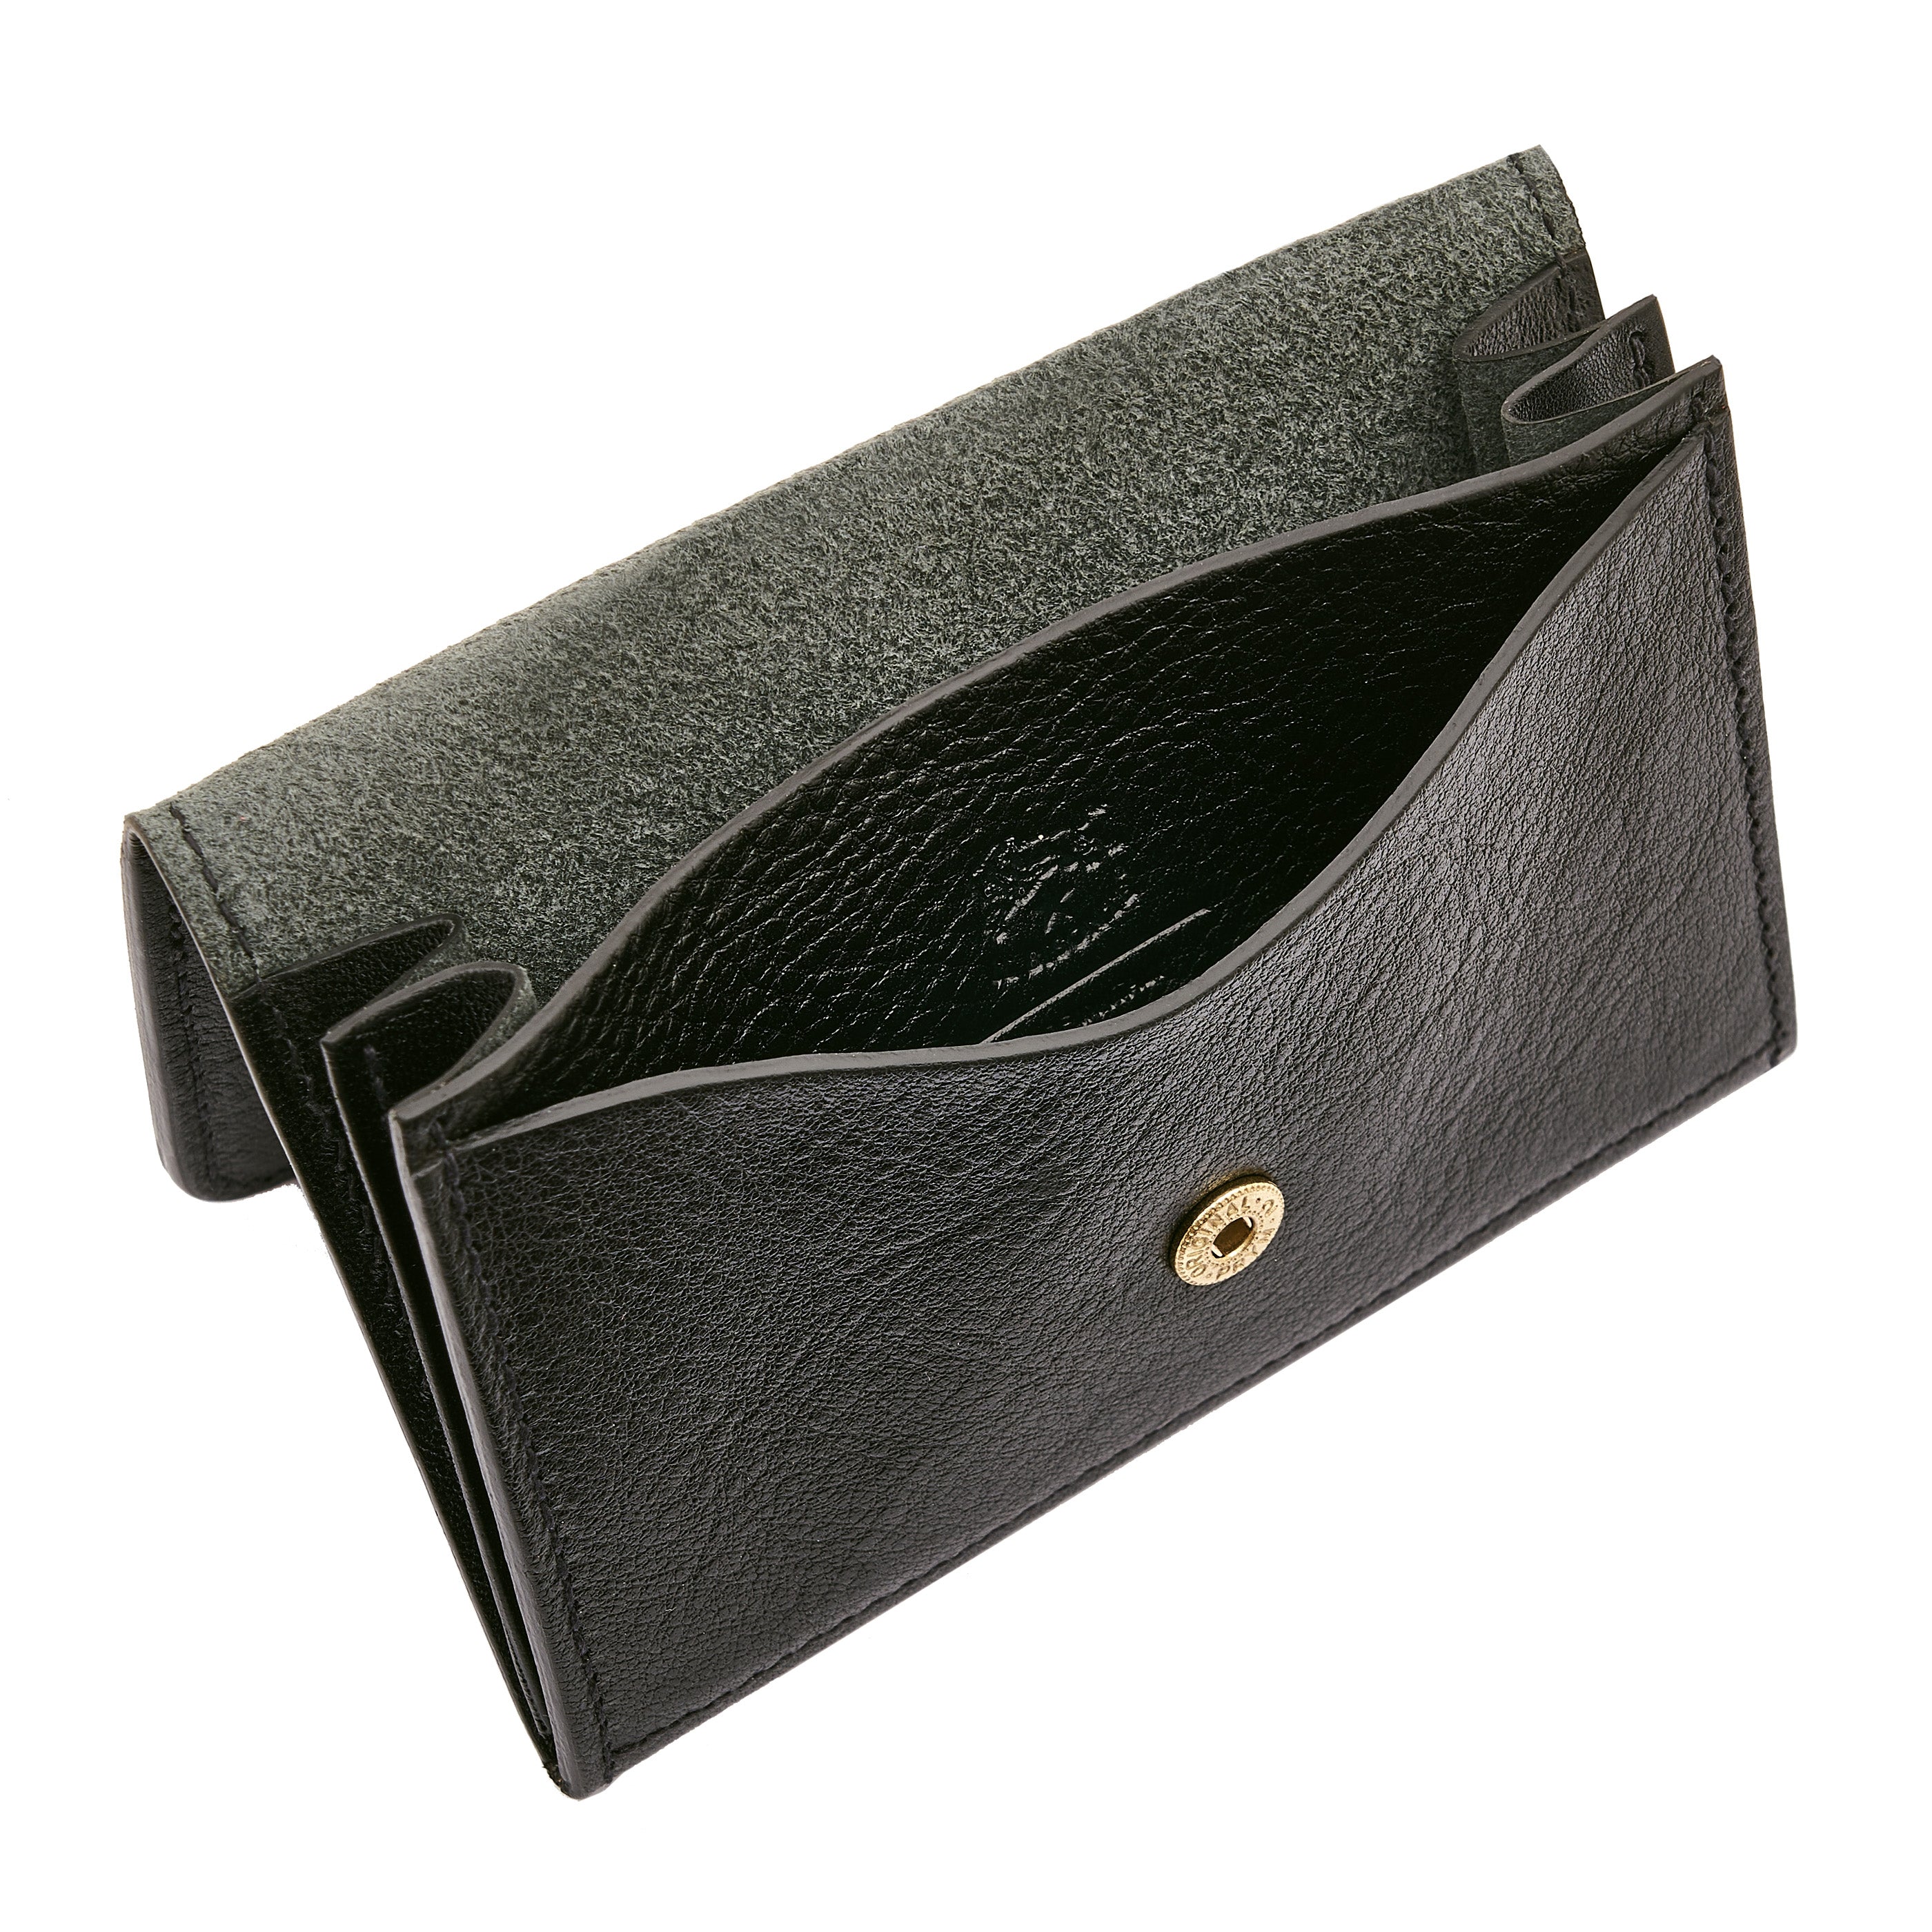 Galileo | Men's card case in calf leather color black